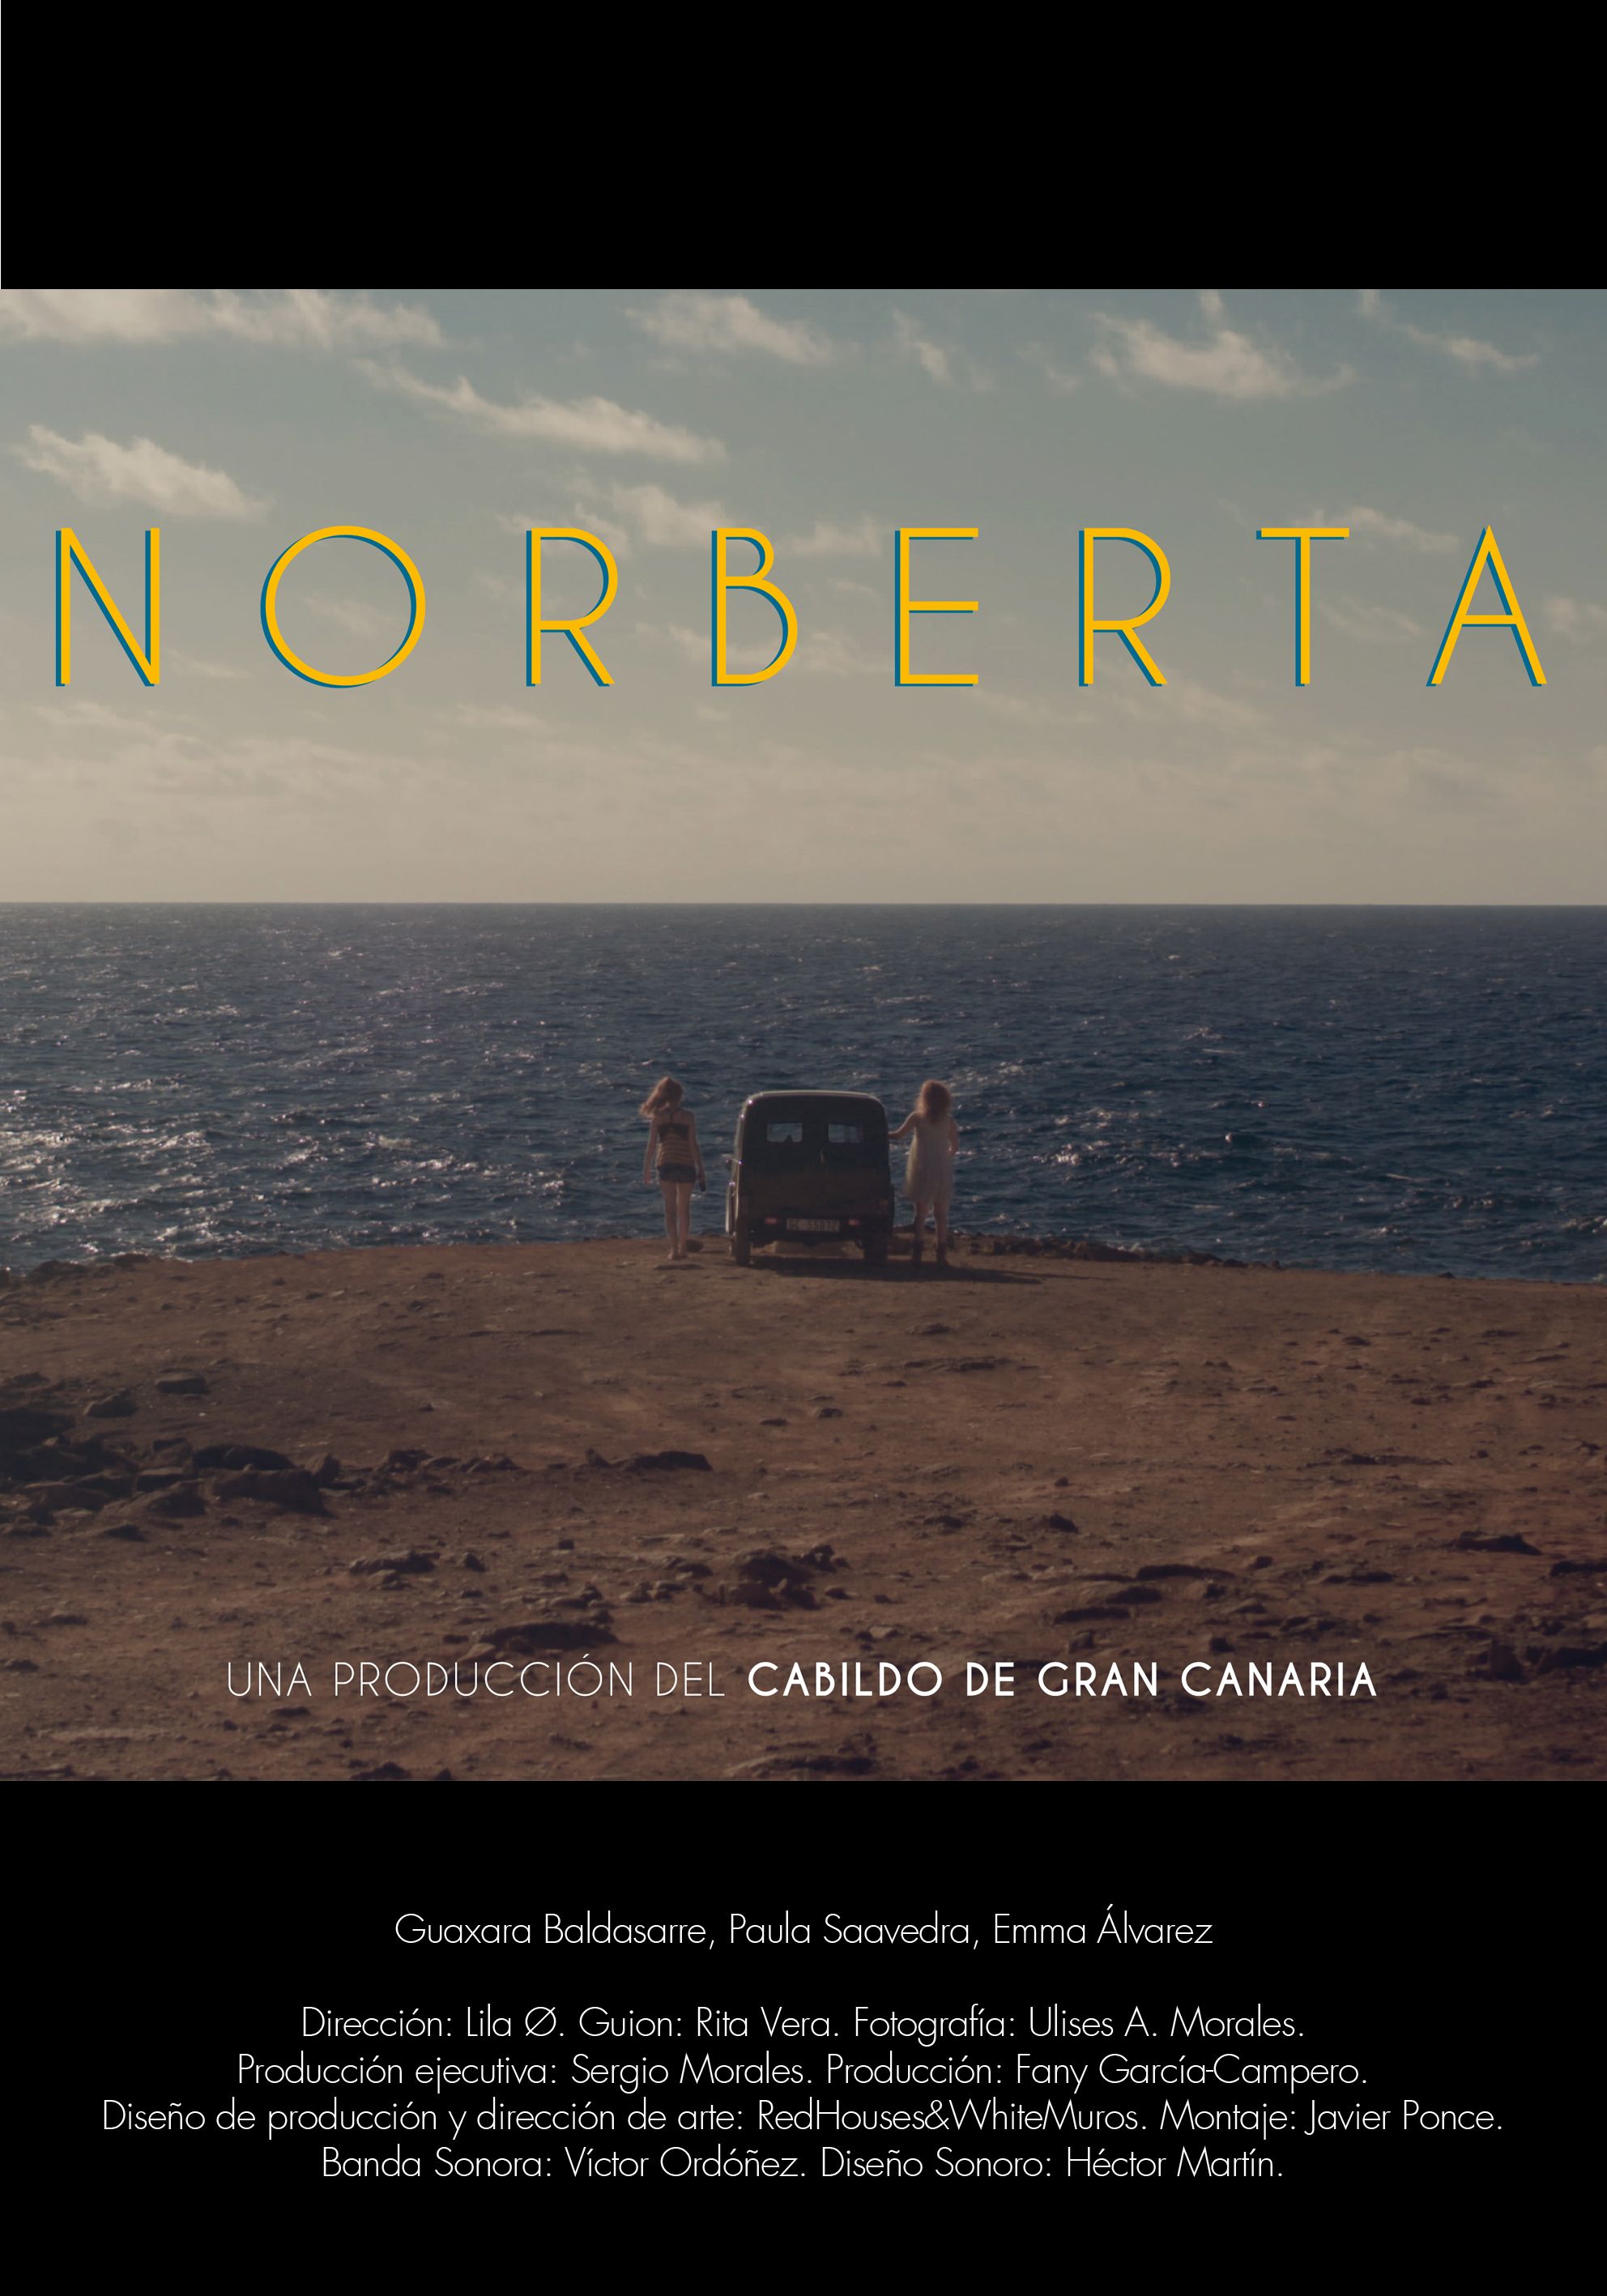 Cartel del cortometraje Norberta